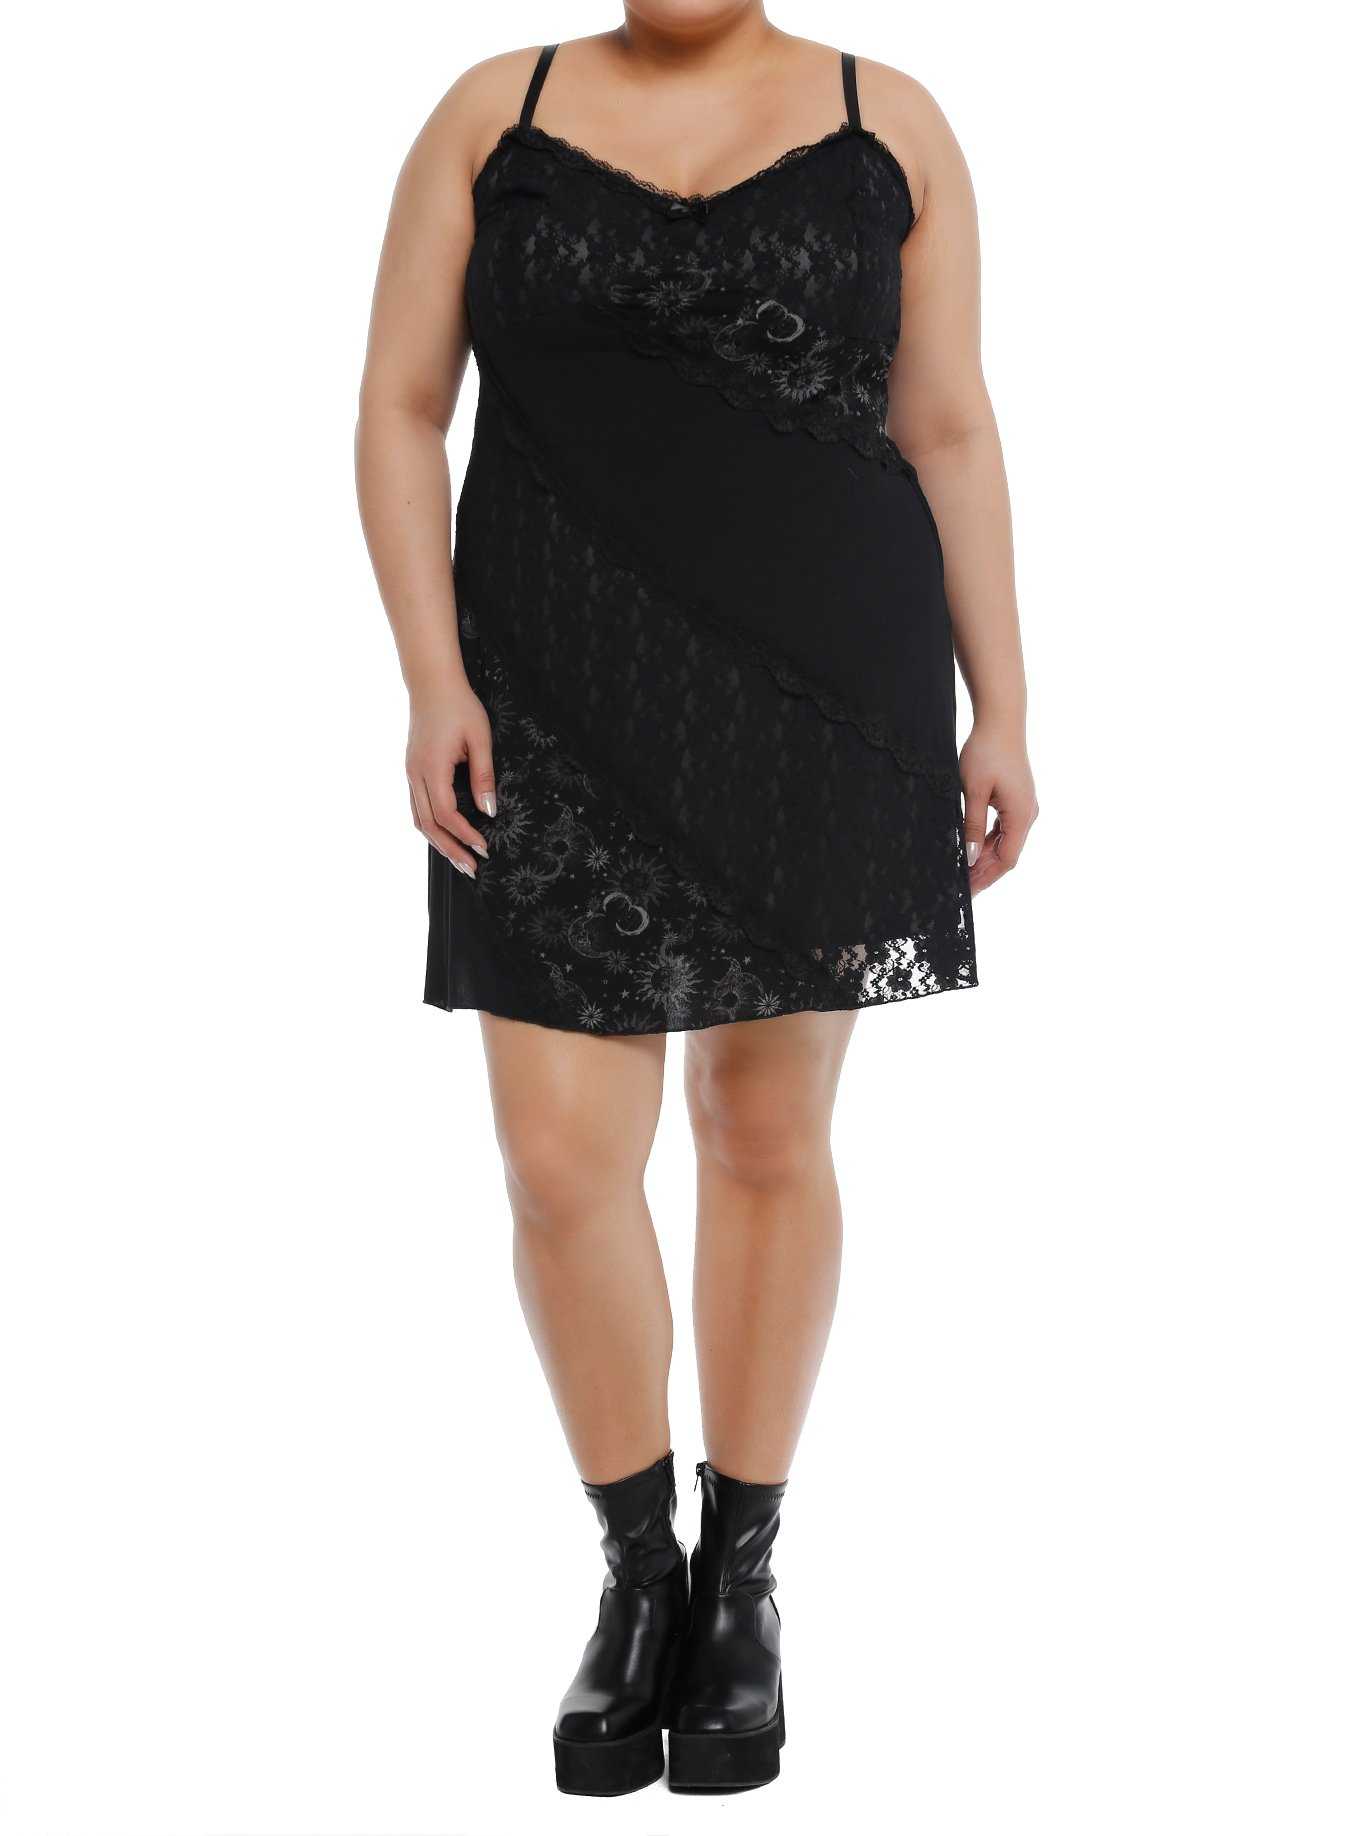 Plus Size Dresses: Black, Skater & Cute Dresses